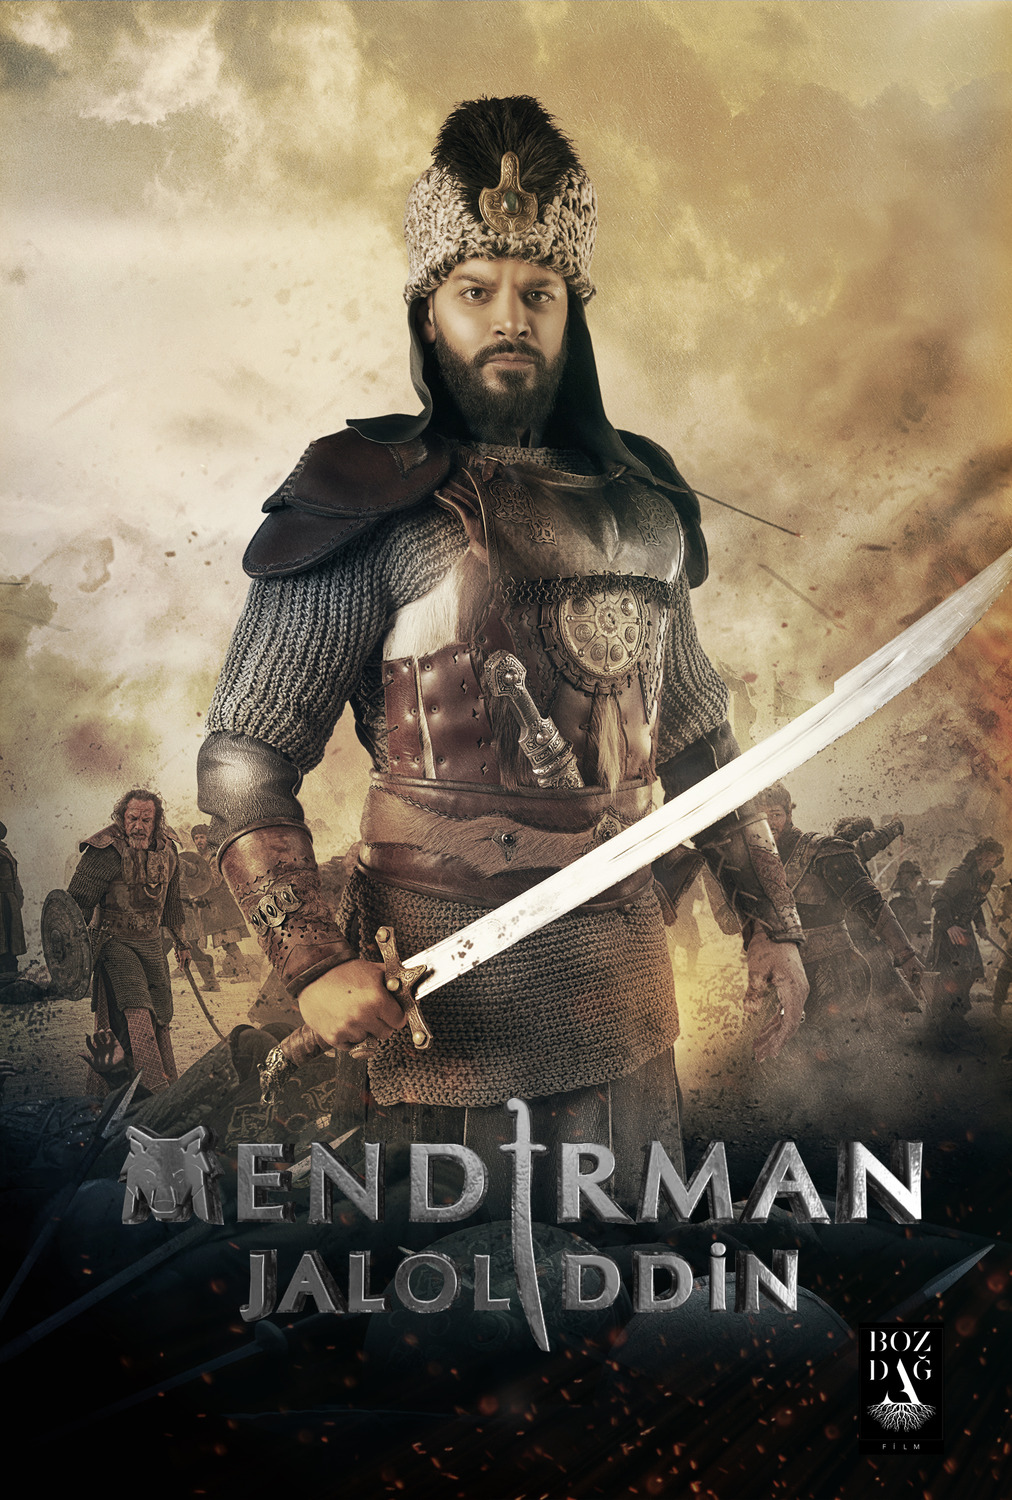 Extra Large TV Poster Image for Mendirman Jaloliddin (#4 of 7)